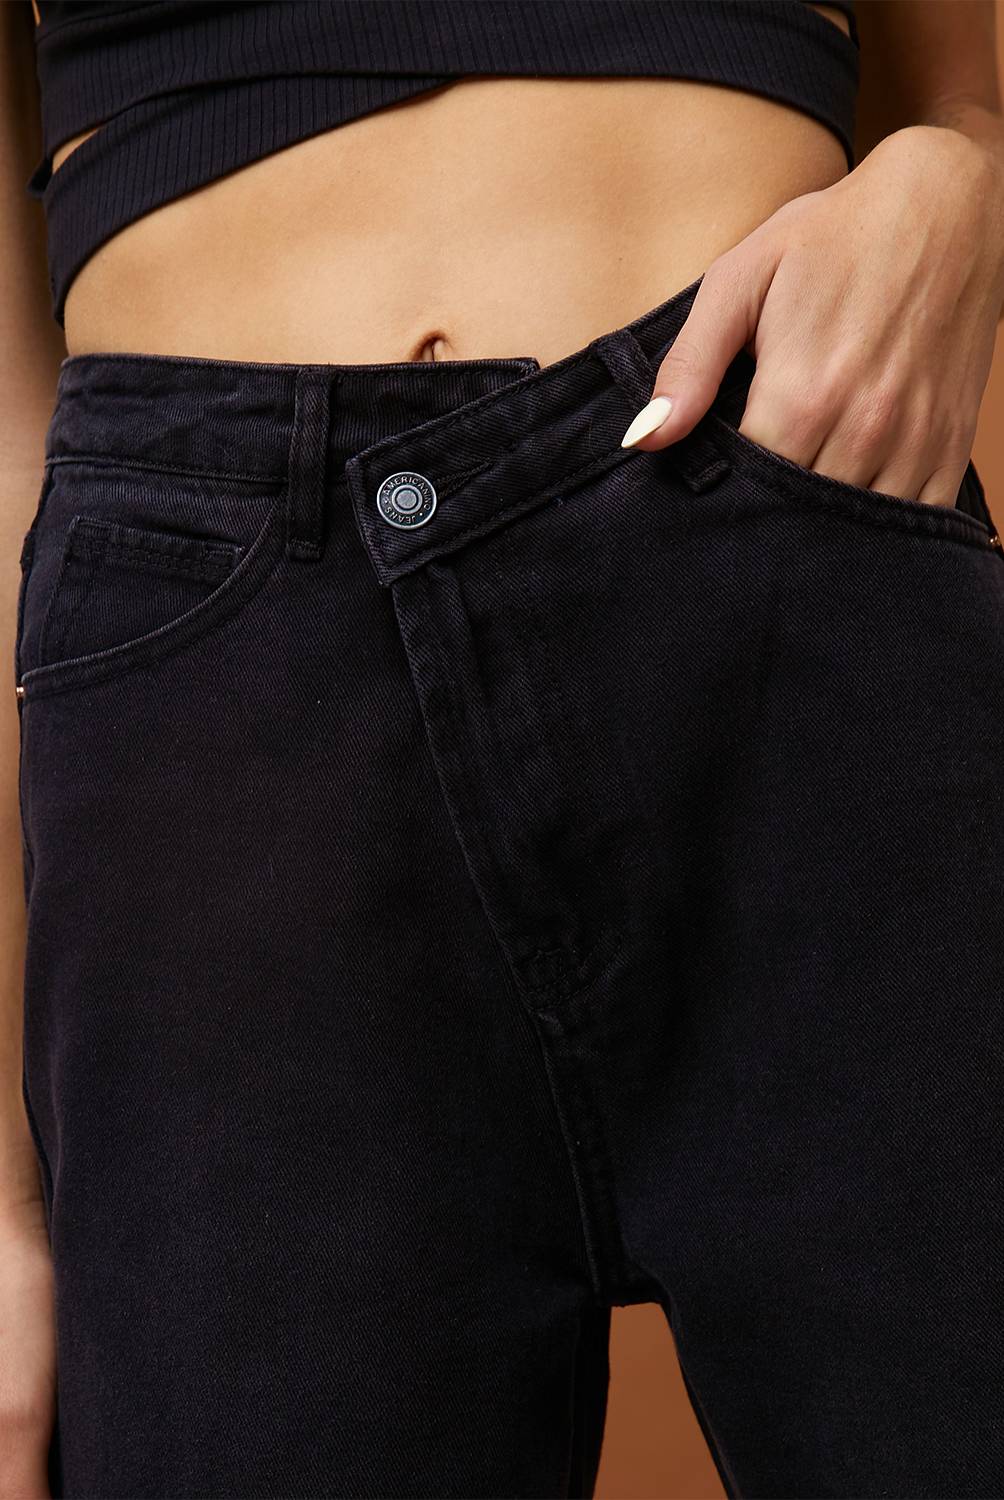 AMERICANINO - Americanino Jeans Wide Leg Tiro Alto Algodón Mujer